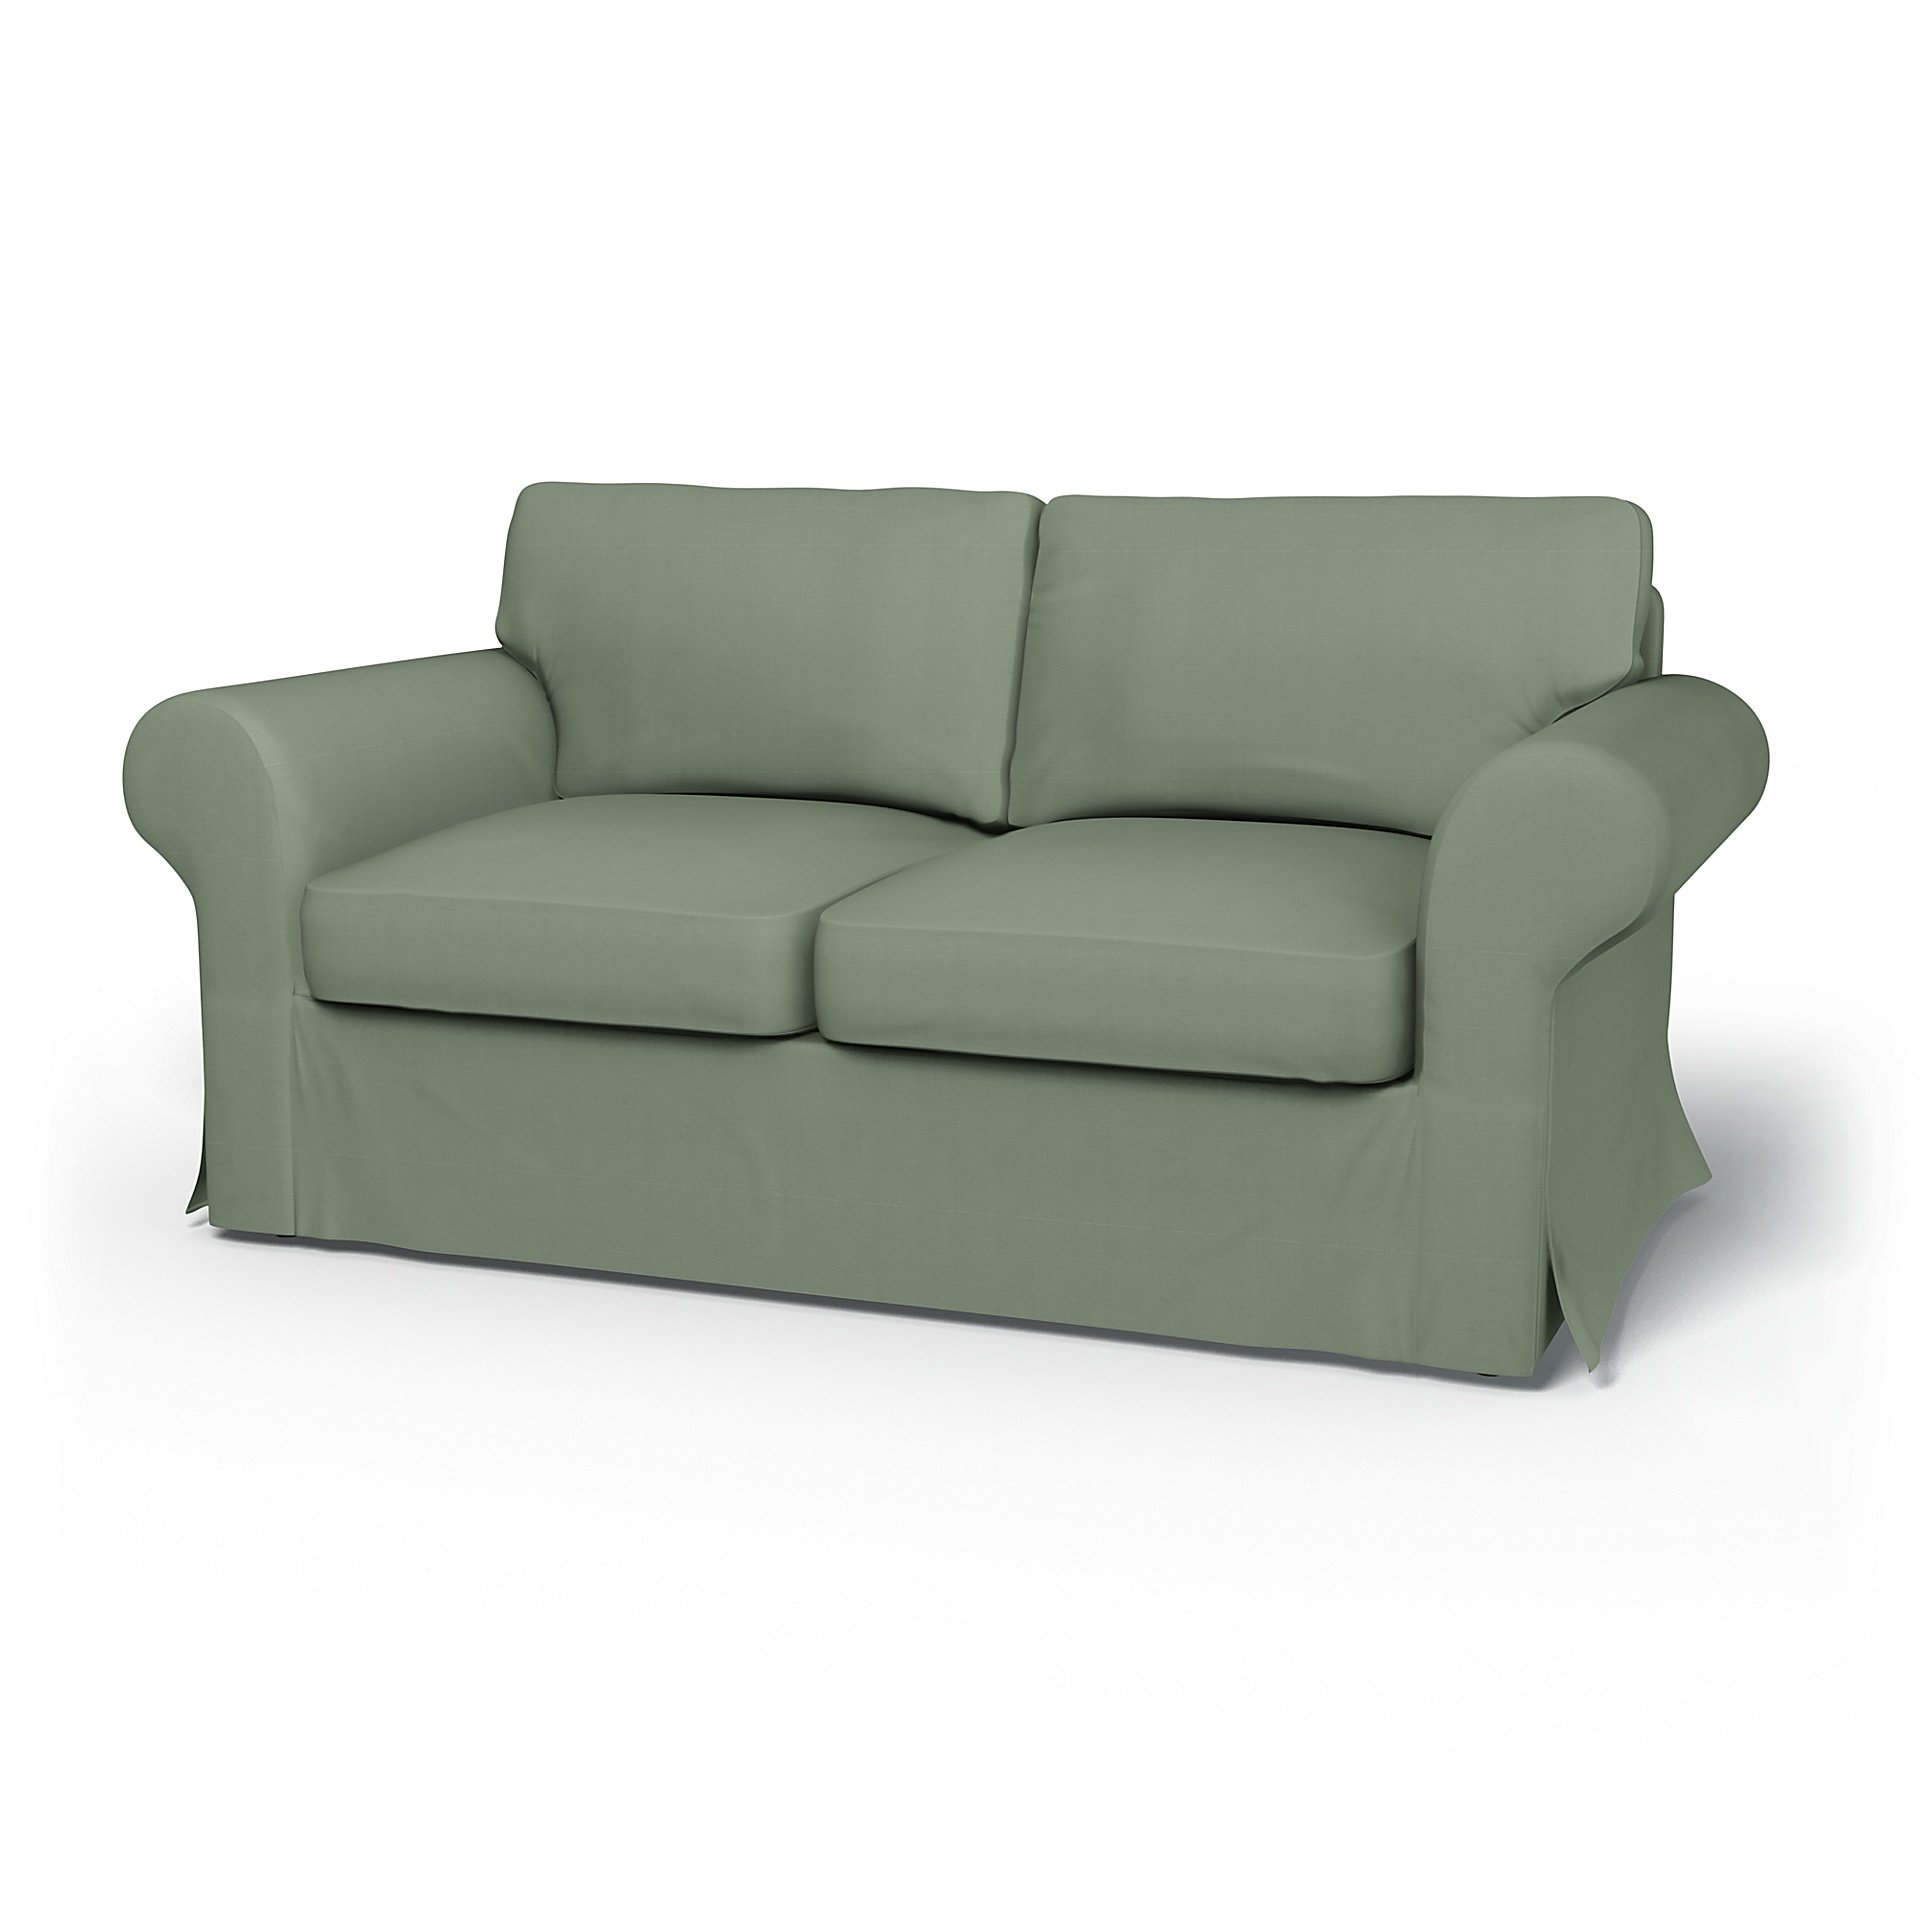 IKEA - Ektorp 2 Seater Sofa Bed Cover, Seagrass, Cotton - Bemz